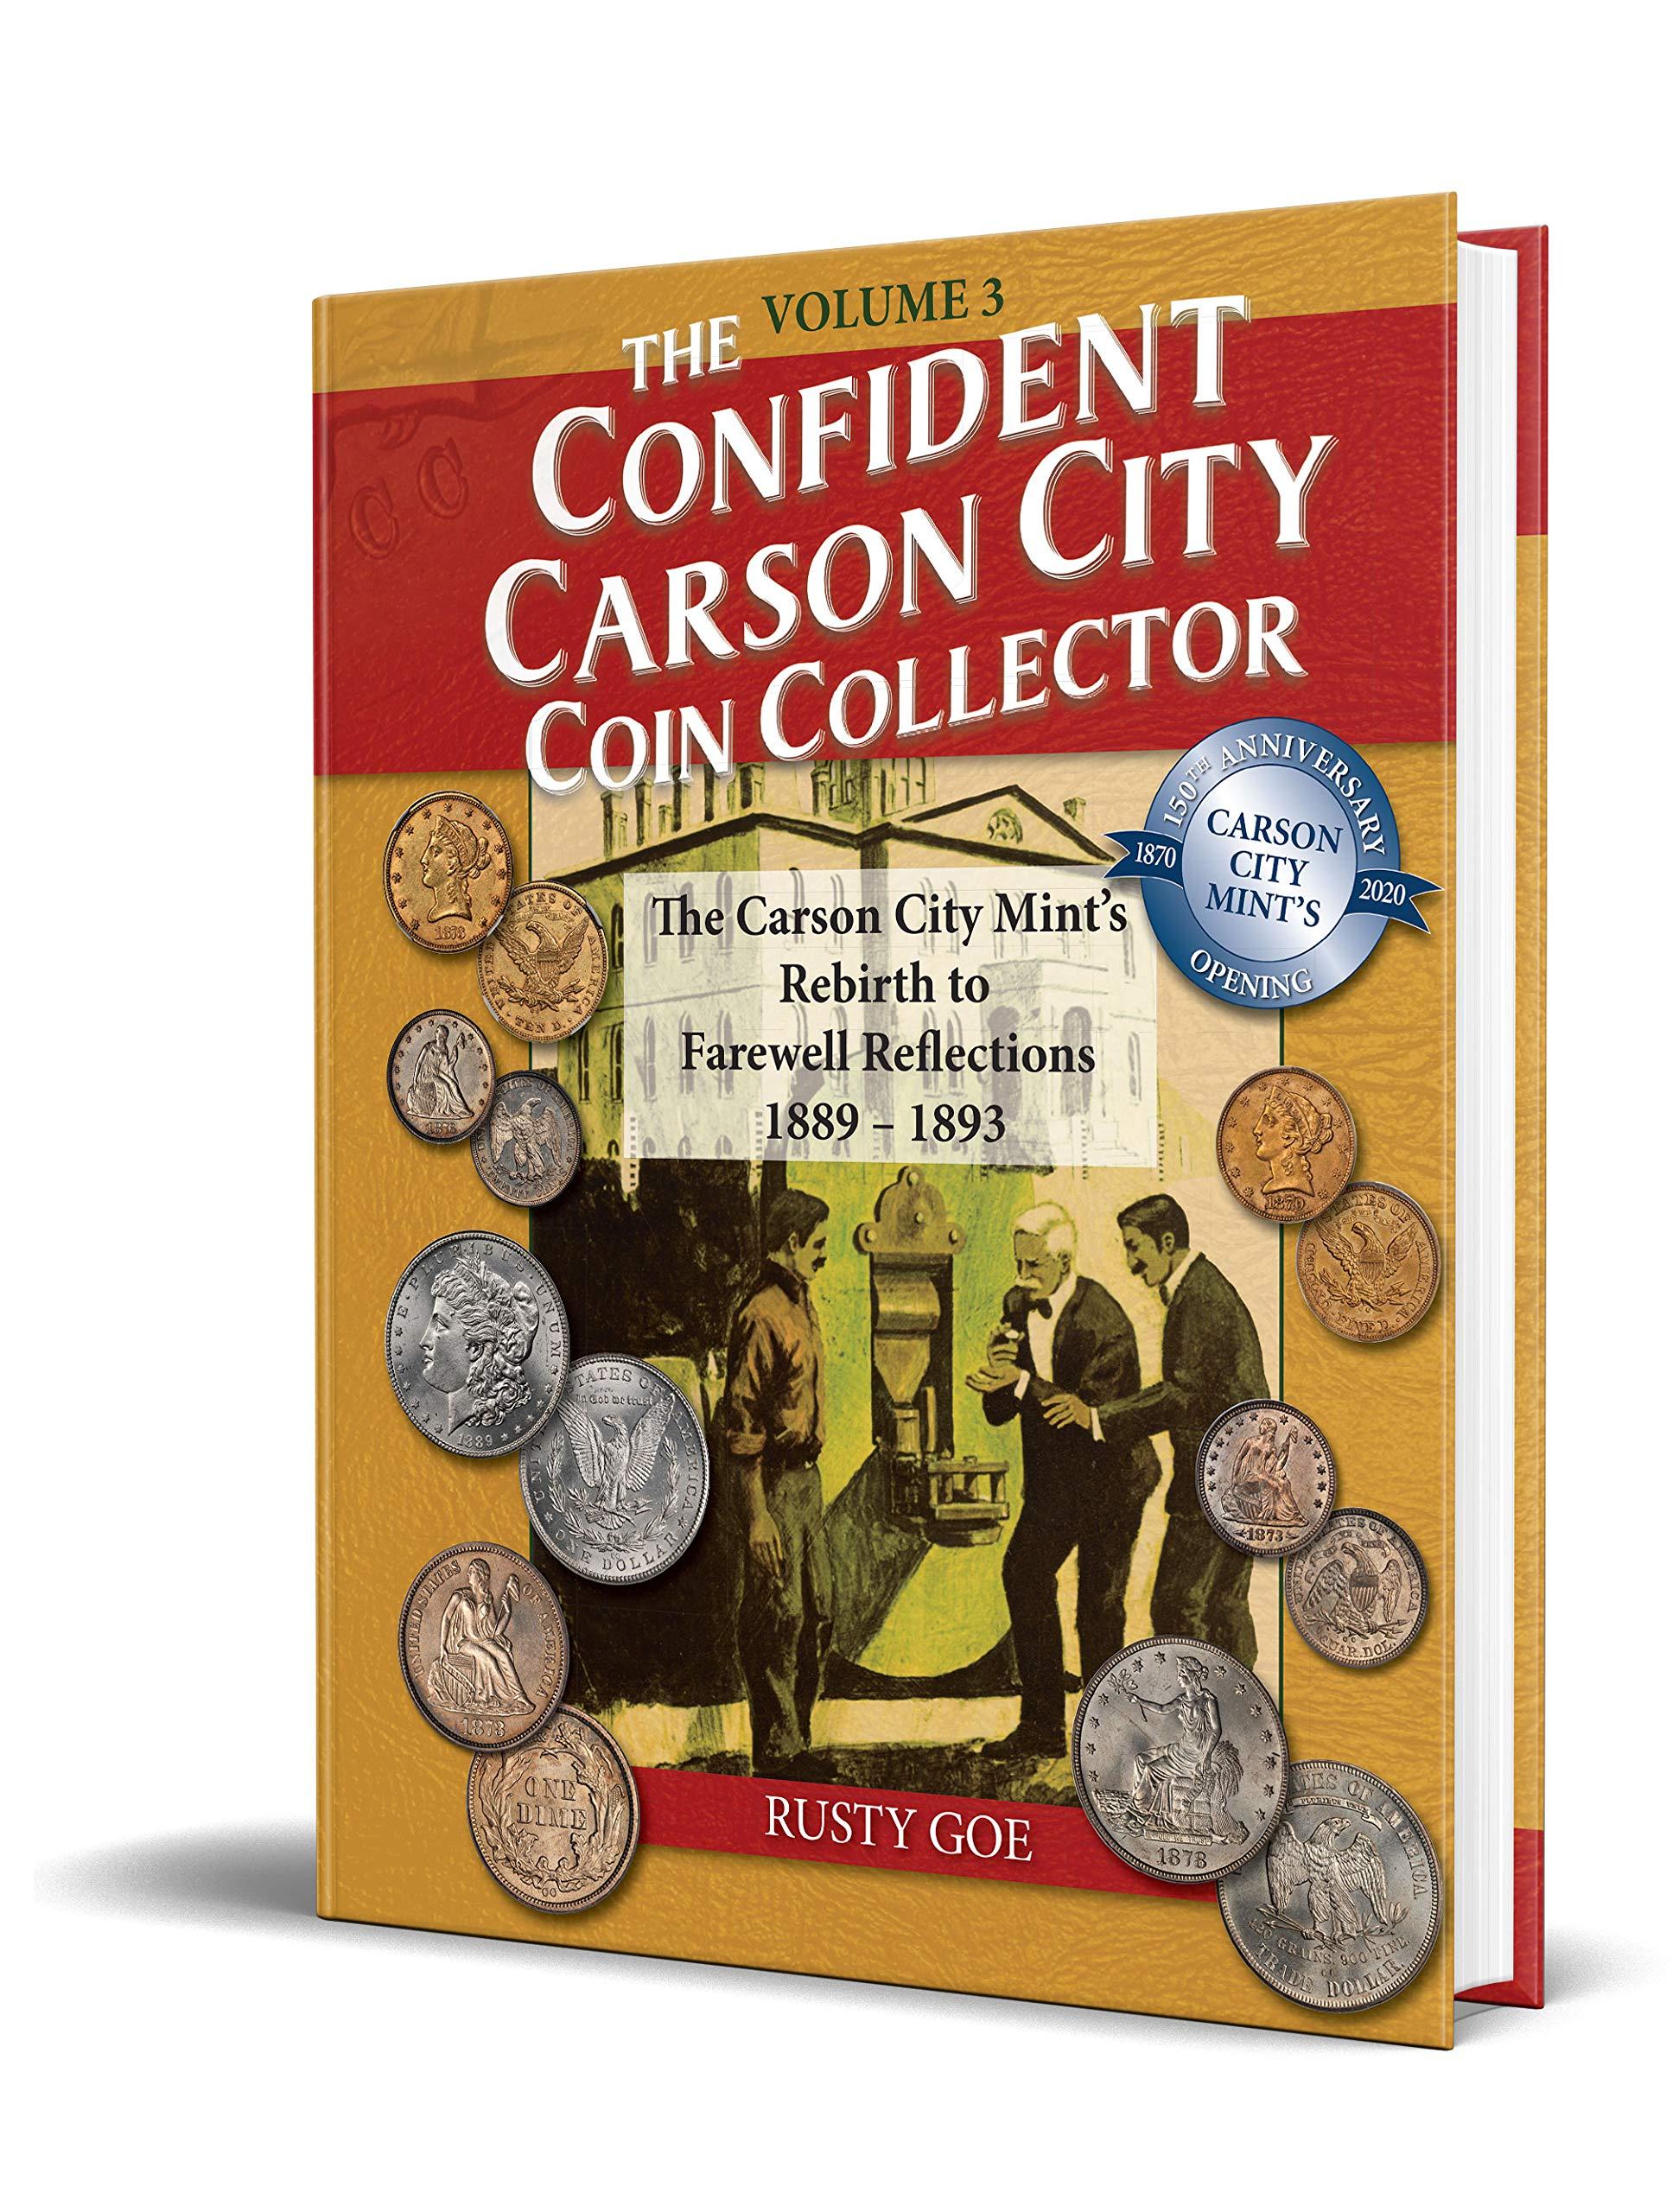 The Confident Carson City Coin Collector: Complete 3-Volume Set [Book]